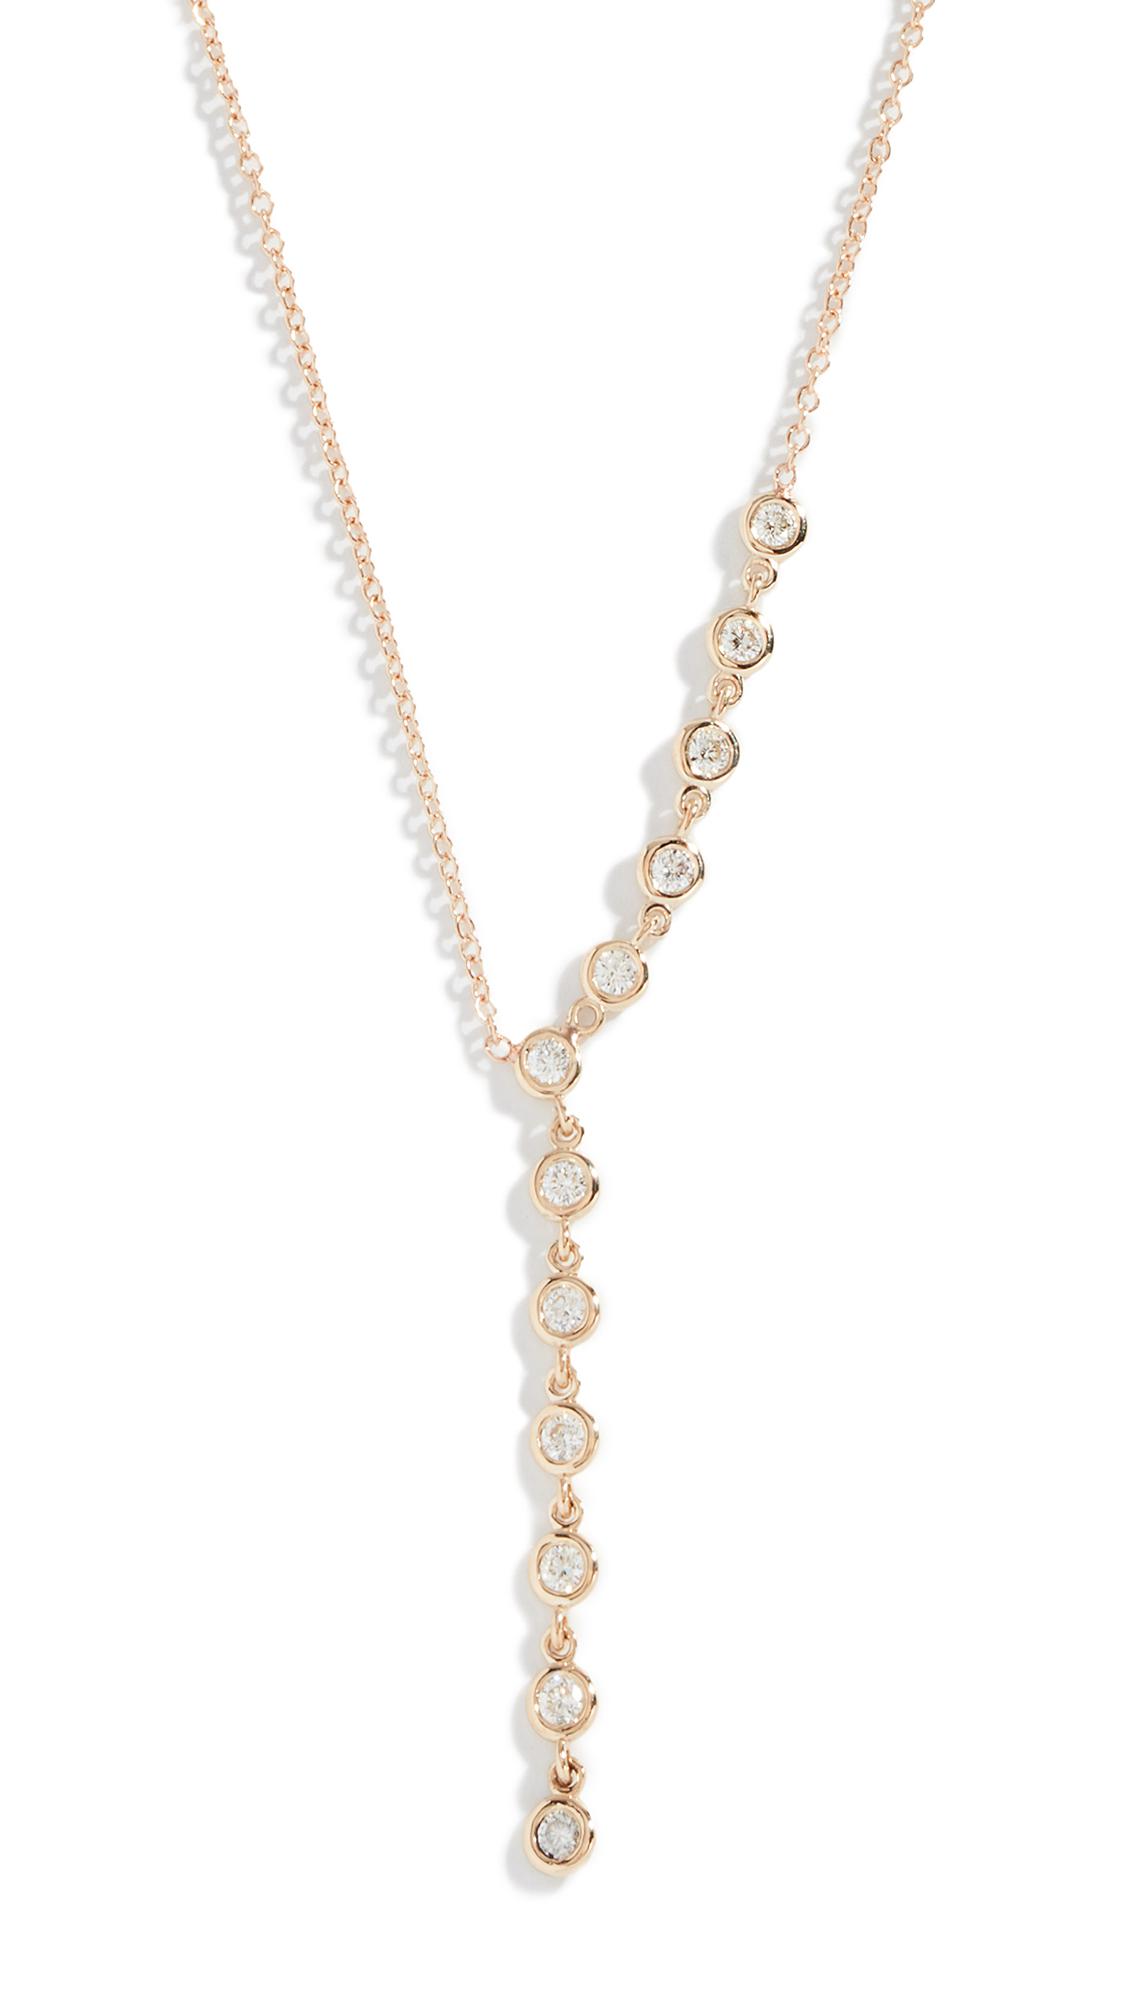 Lyst - Zoe Chicco 14k Lariat Necklace in Metallic